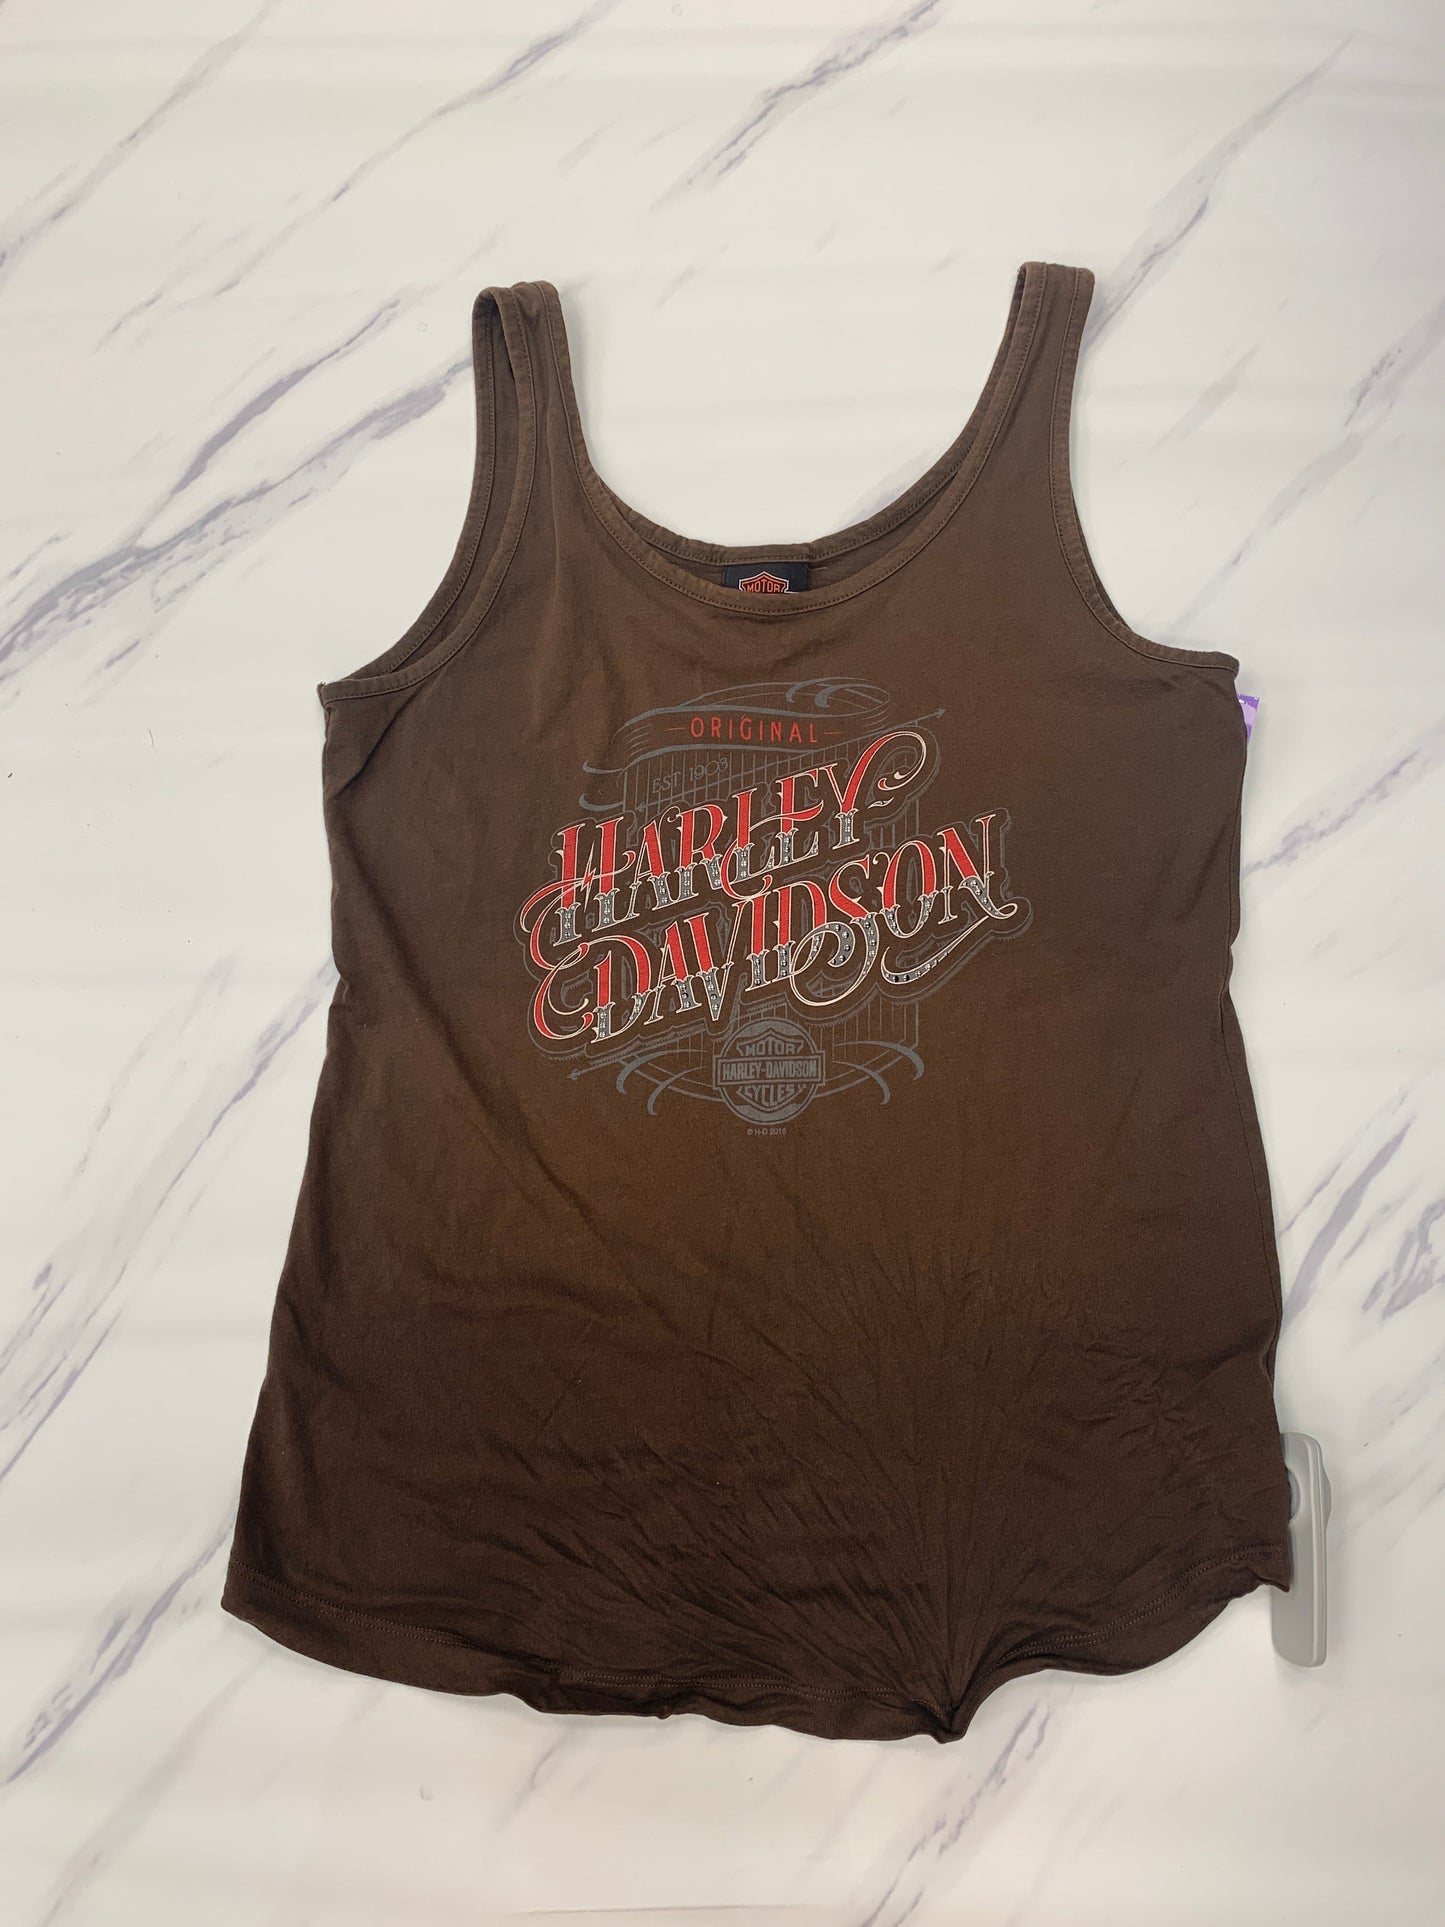 Top Sleeveless By Harley Davidson  Size: L